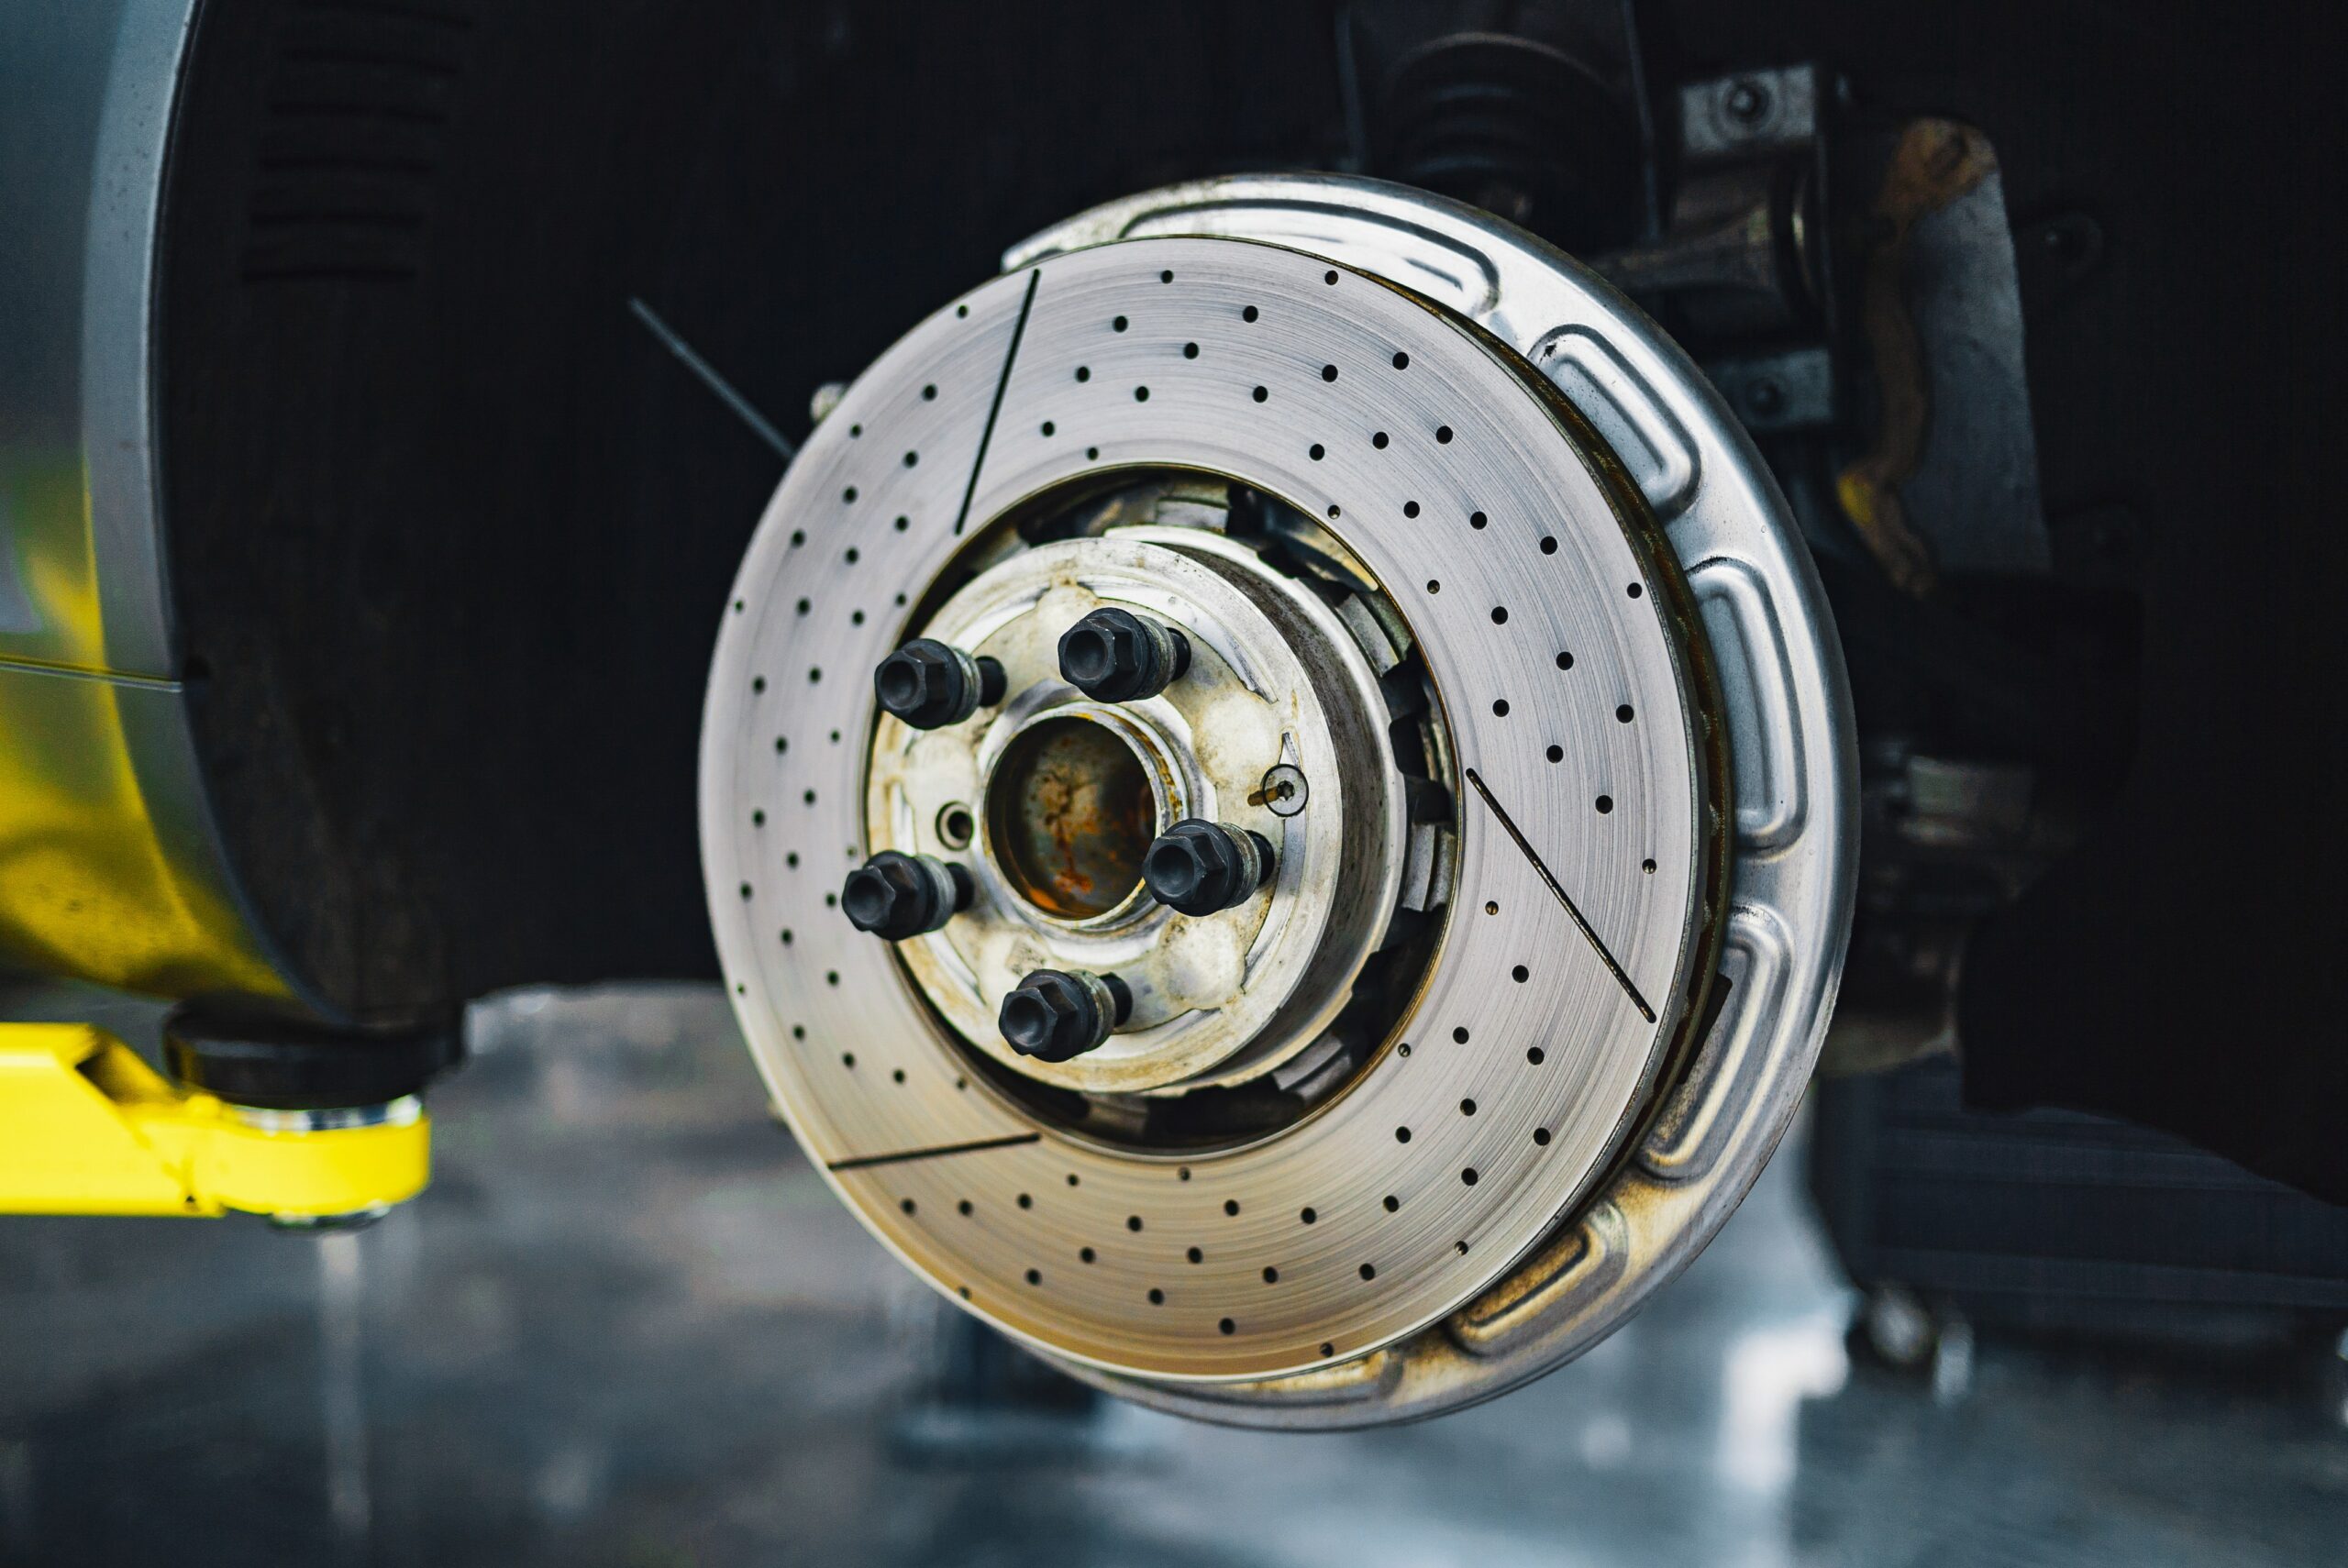 How regenerative braking works in electric vehicles